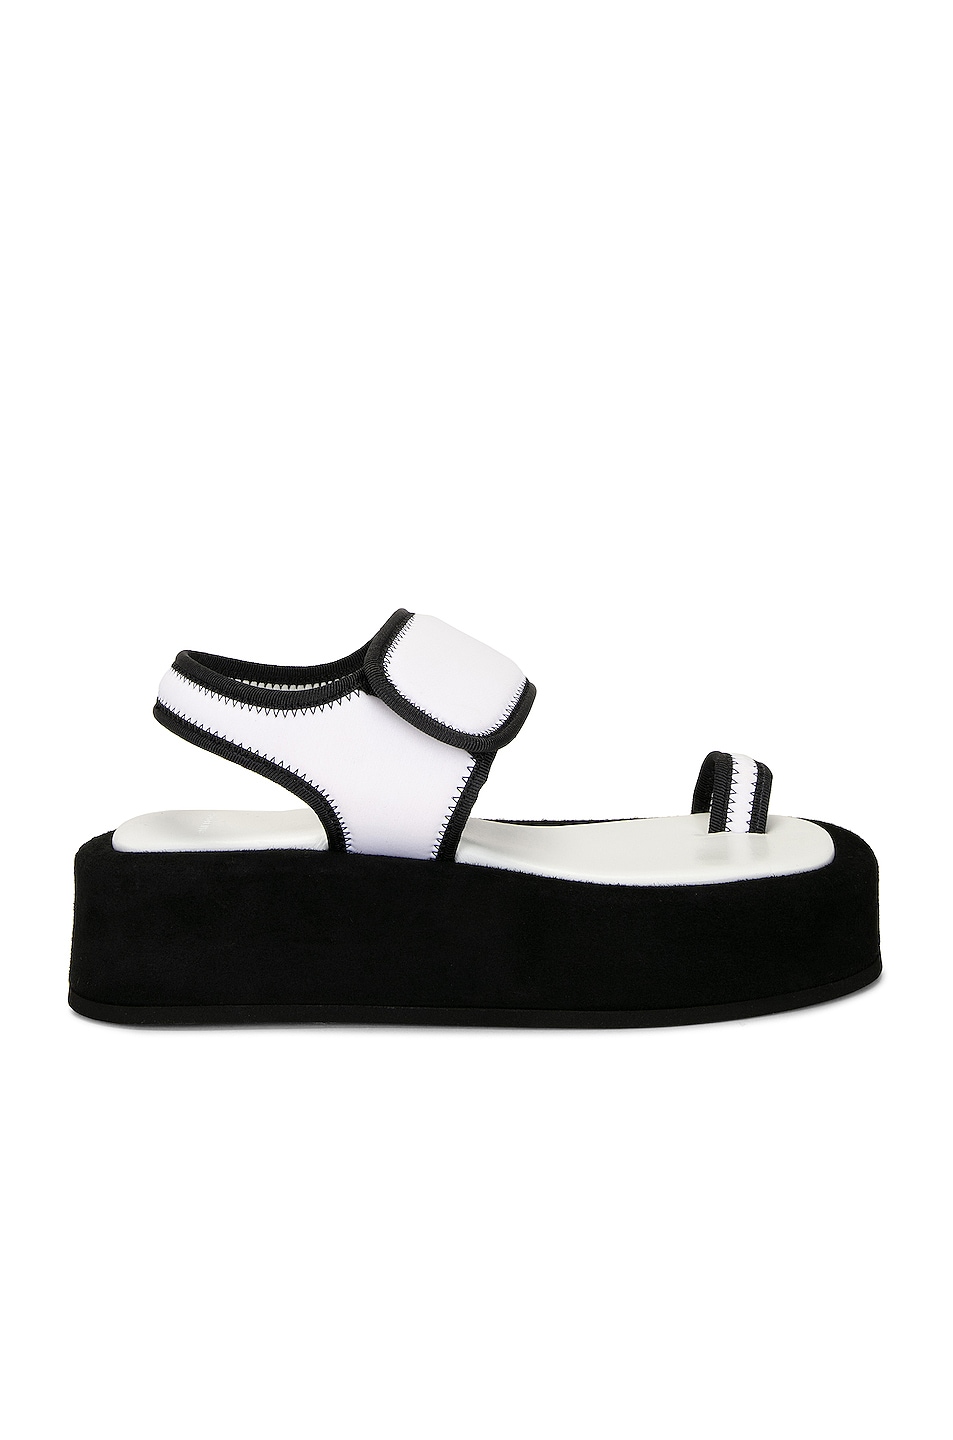 Image 1 of WARDROBE.NYC Platform Sandal in Black & White